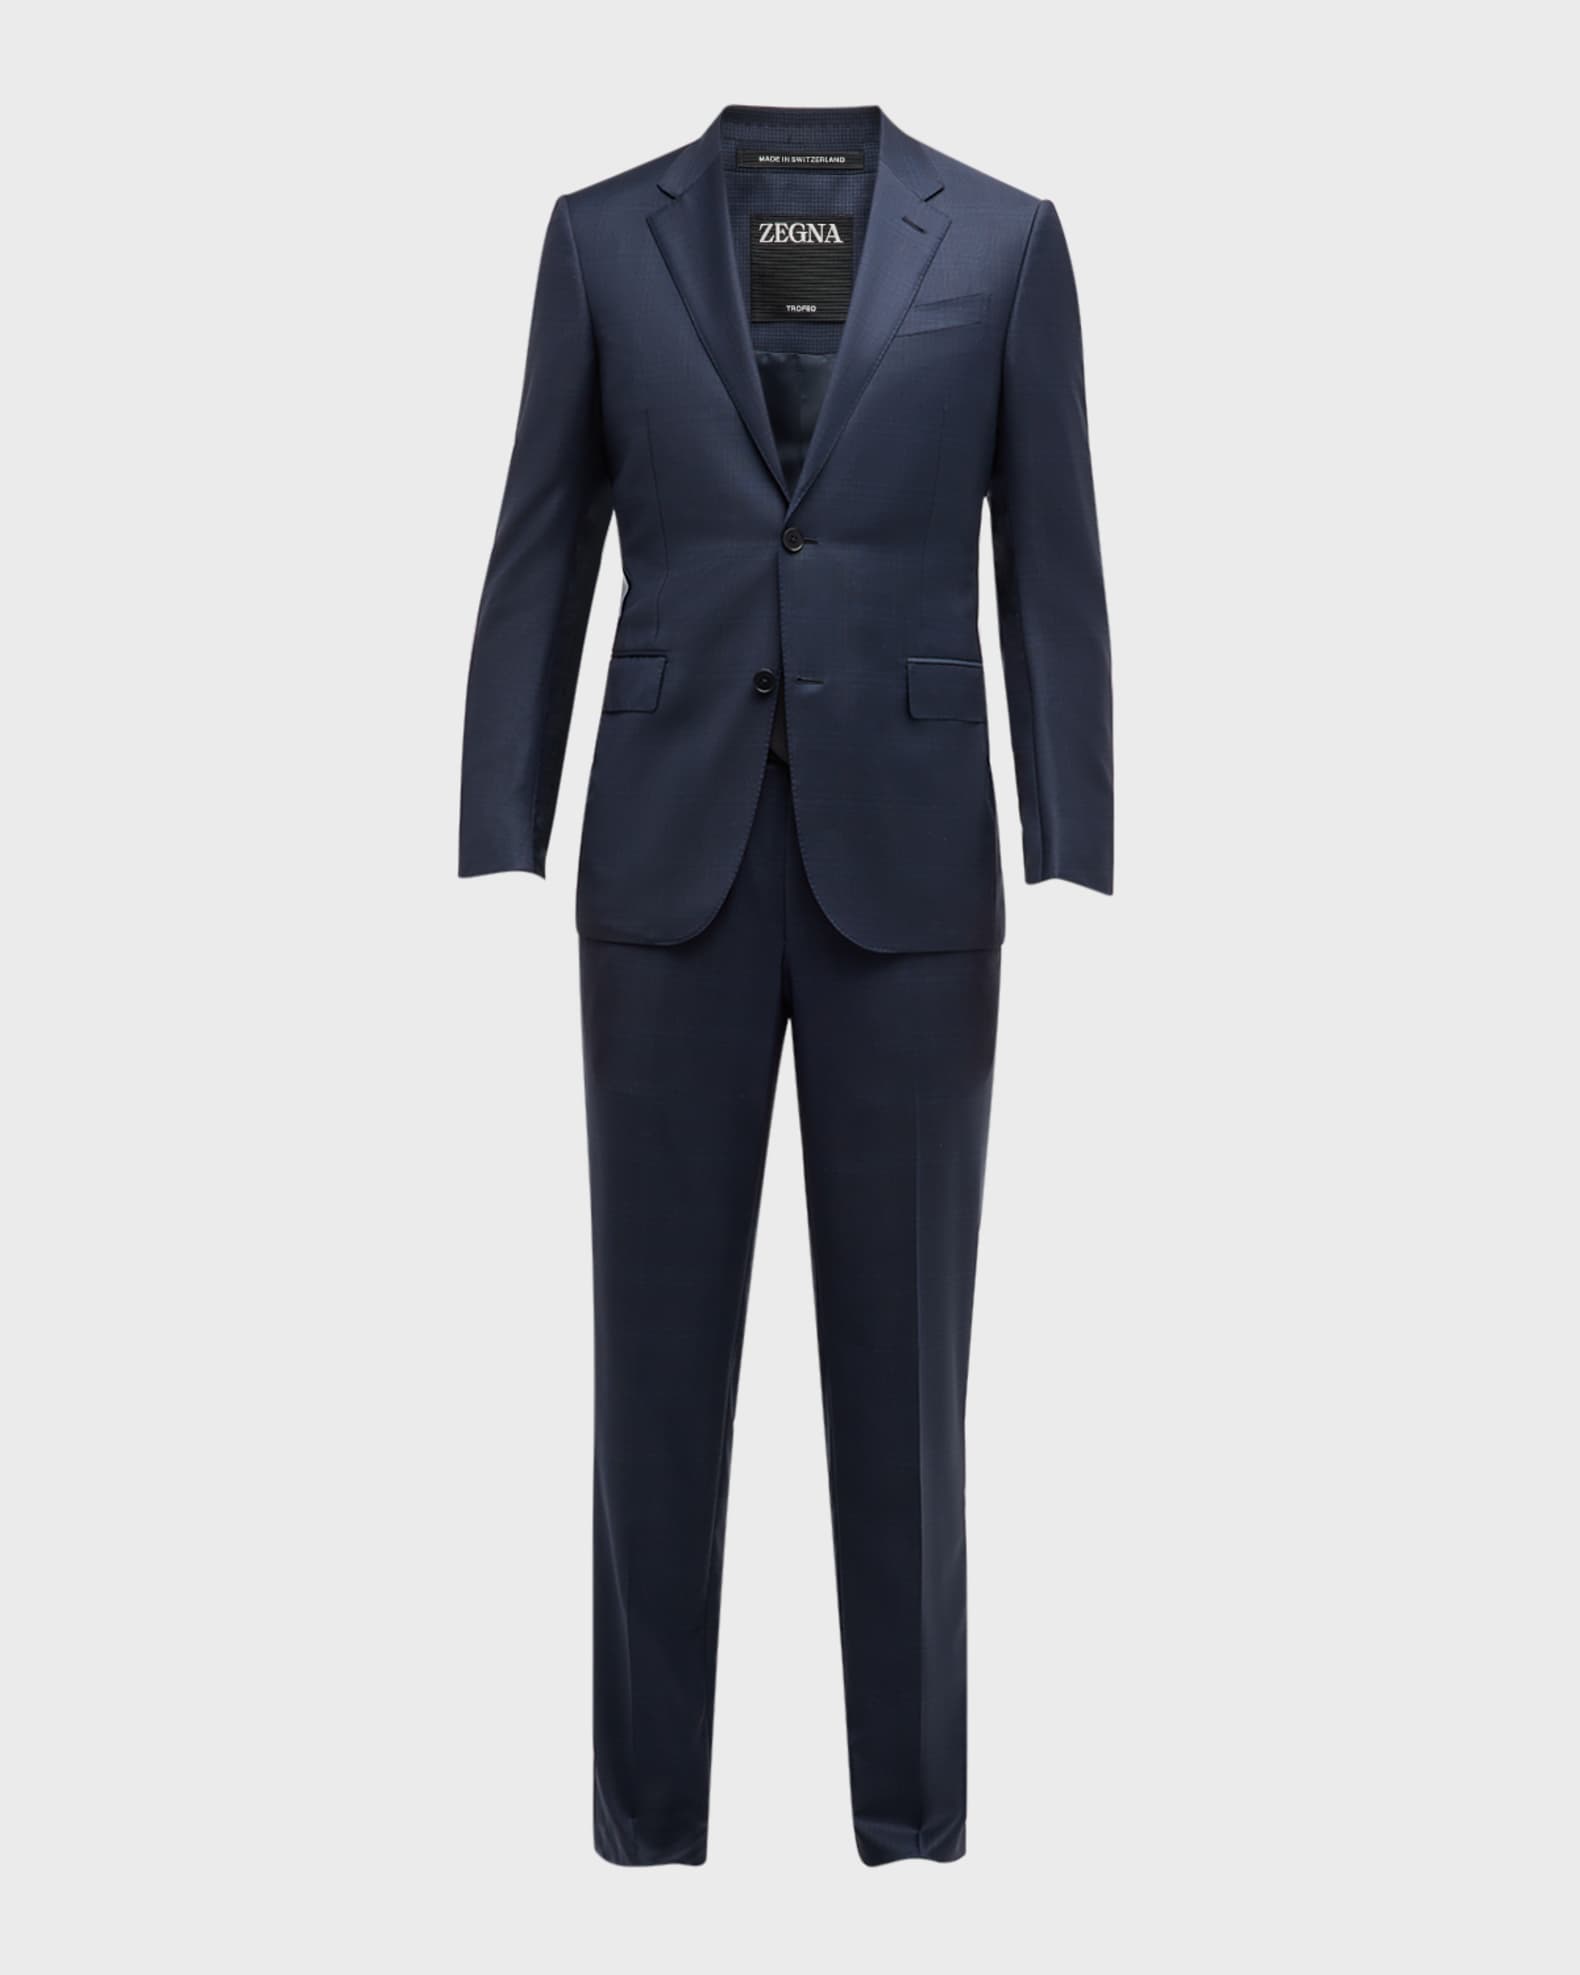 ZEGNA Men's Micro Houndstooth Plaid Suit | Neiman Marcus